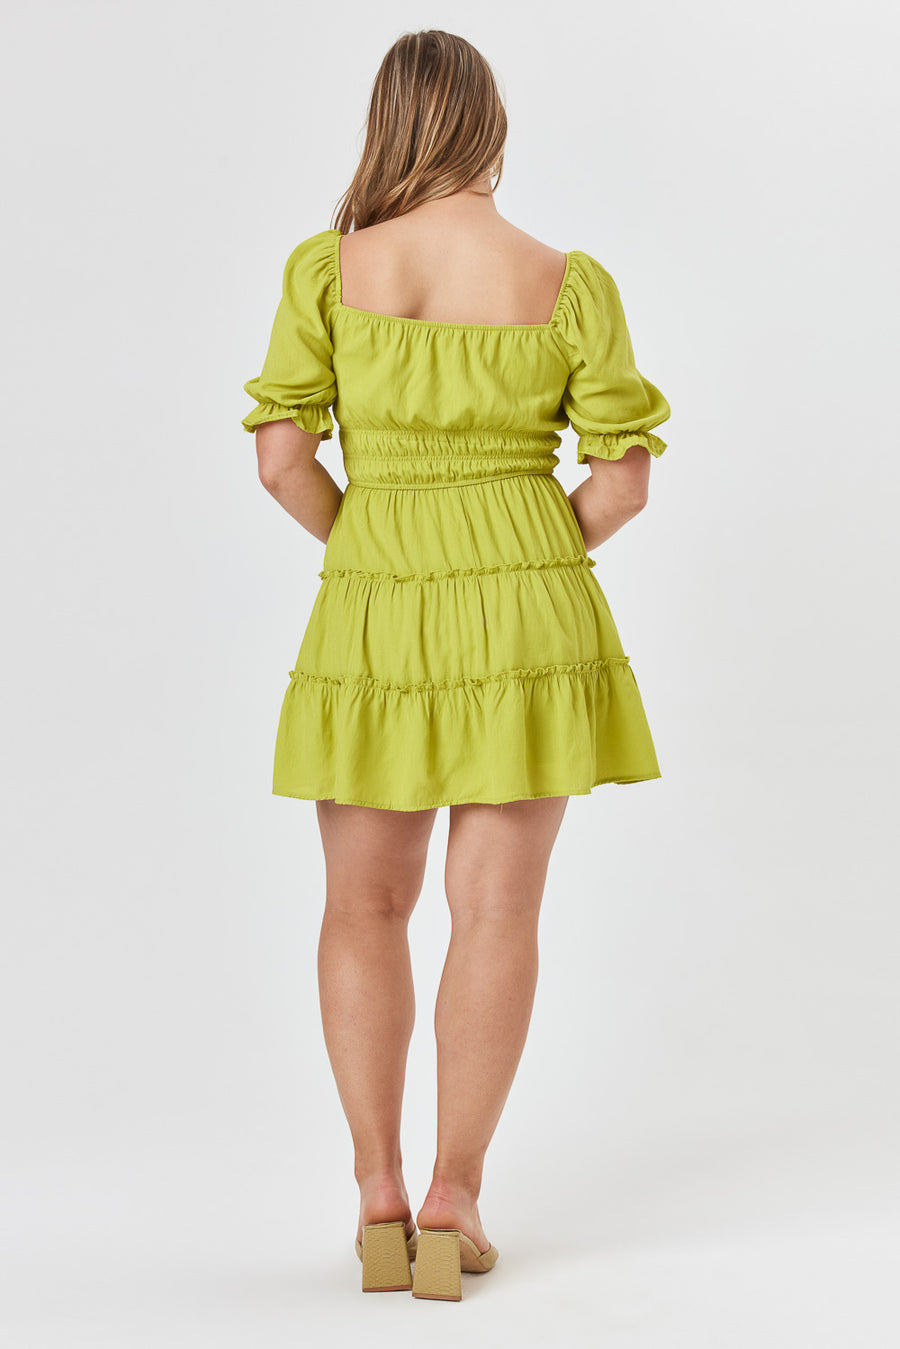 Apple Green Tier Dress - Trixxi Clothing